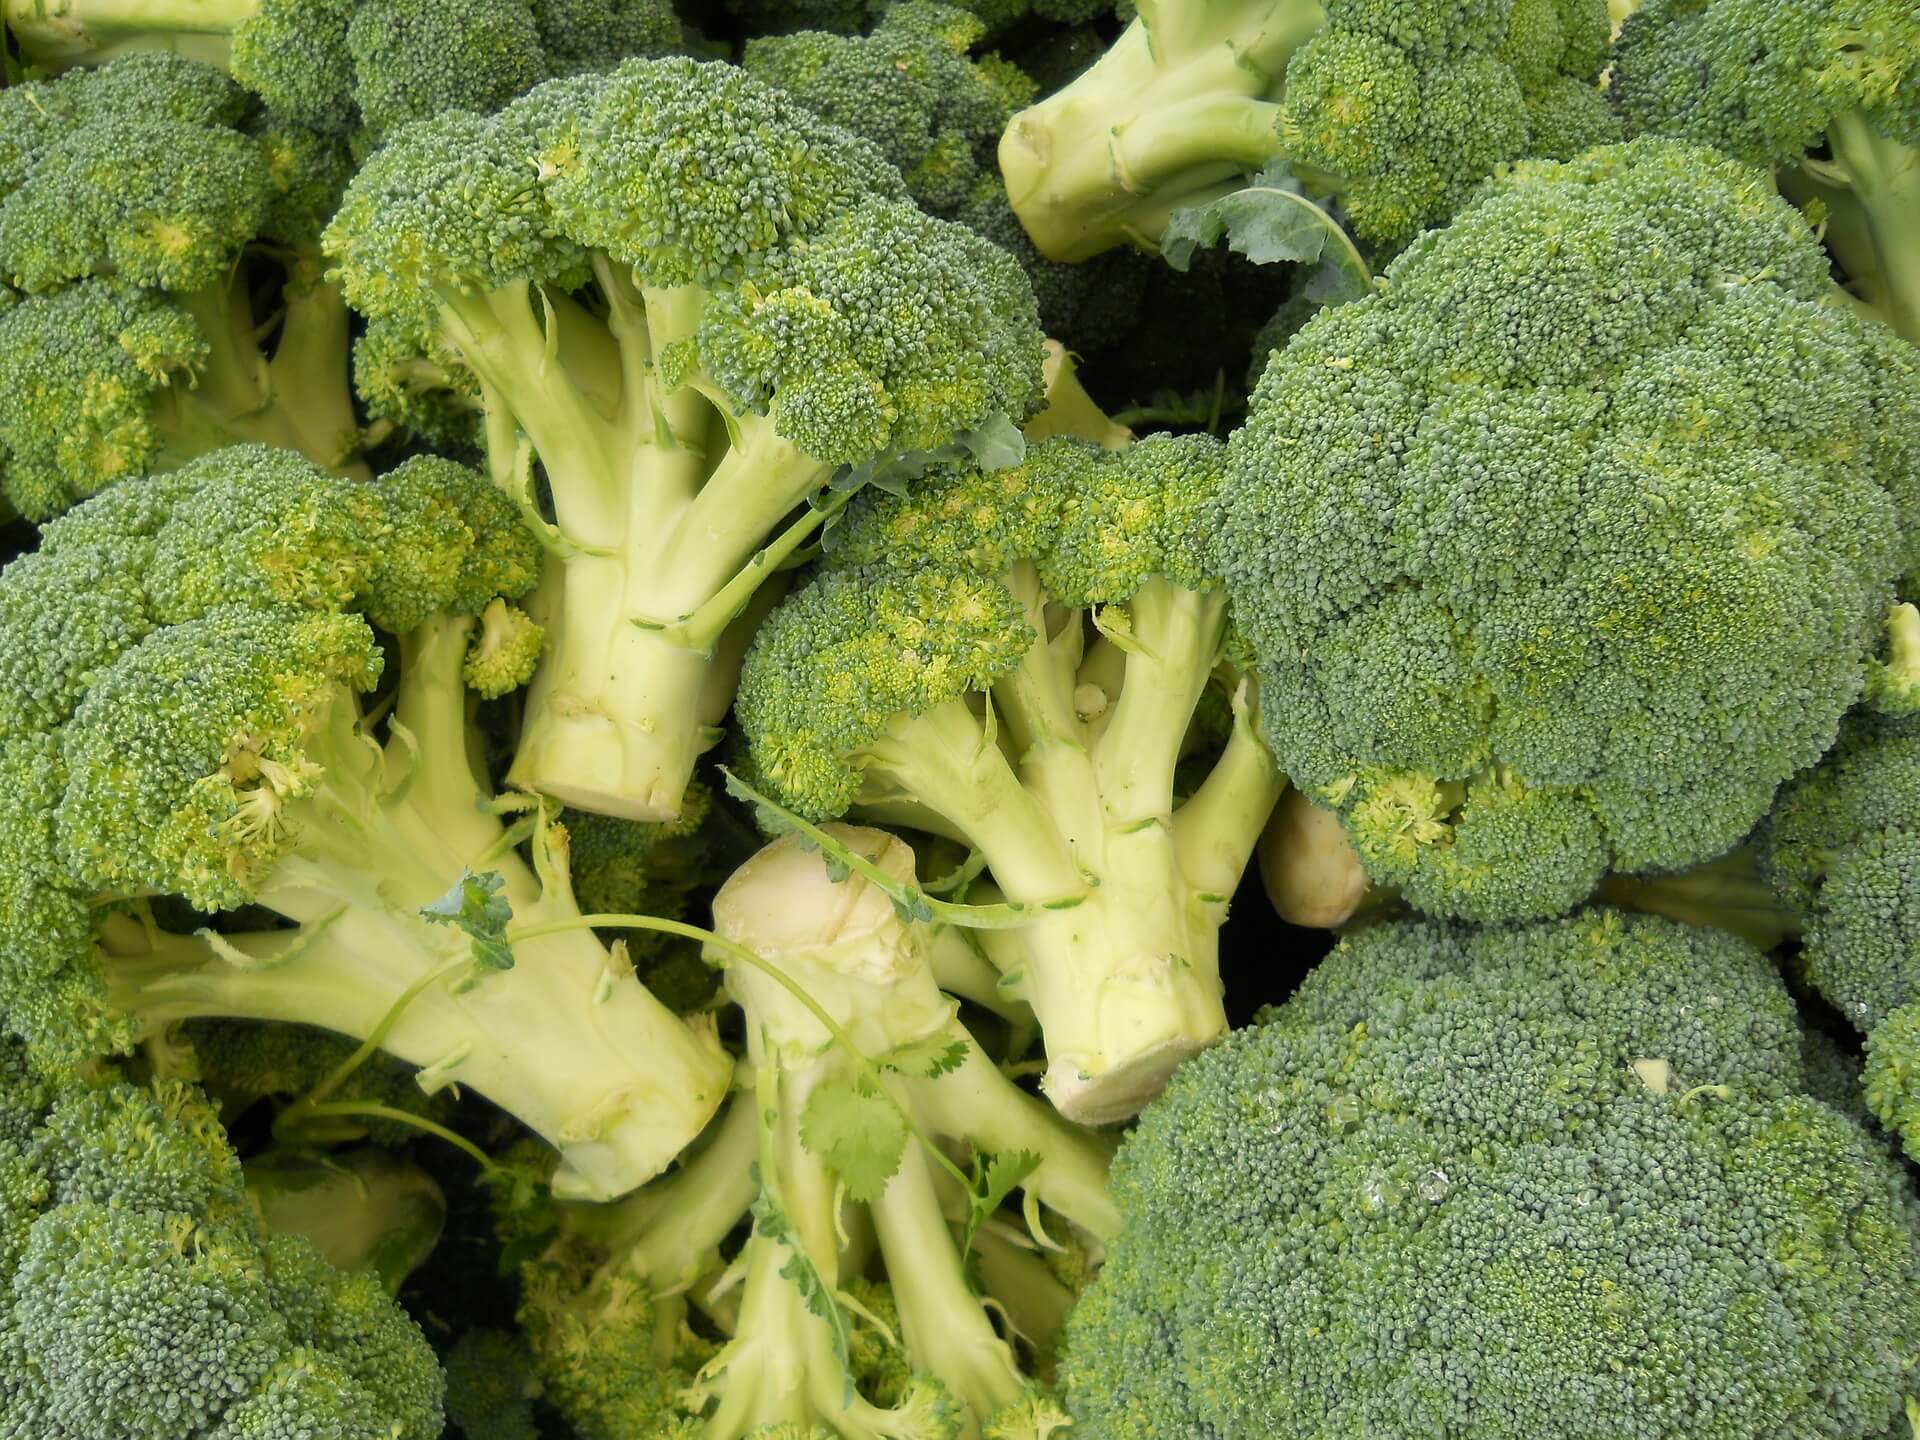 Fresh broccoli florets for your garden